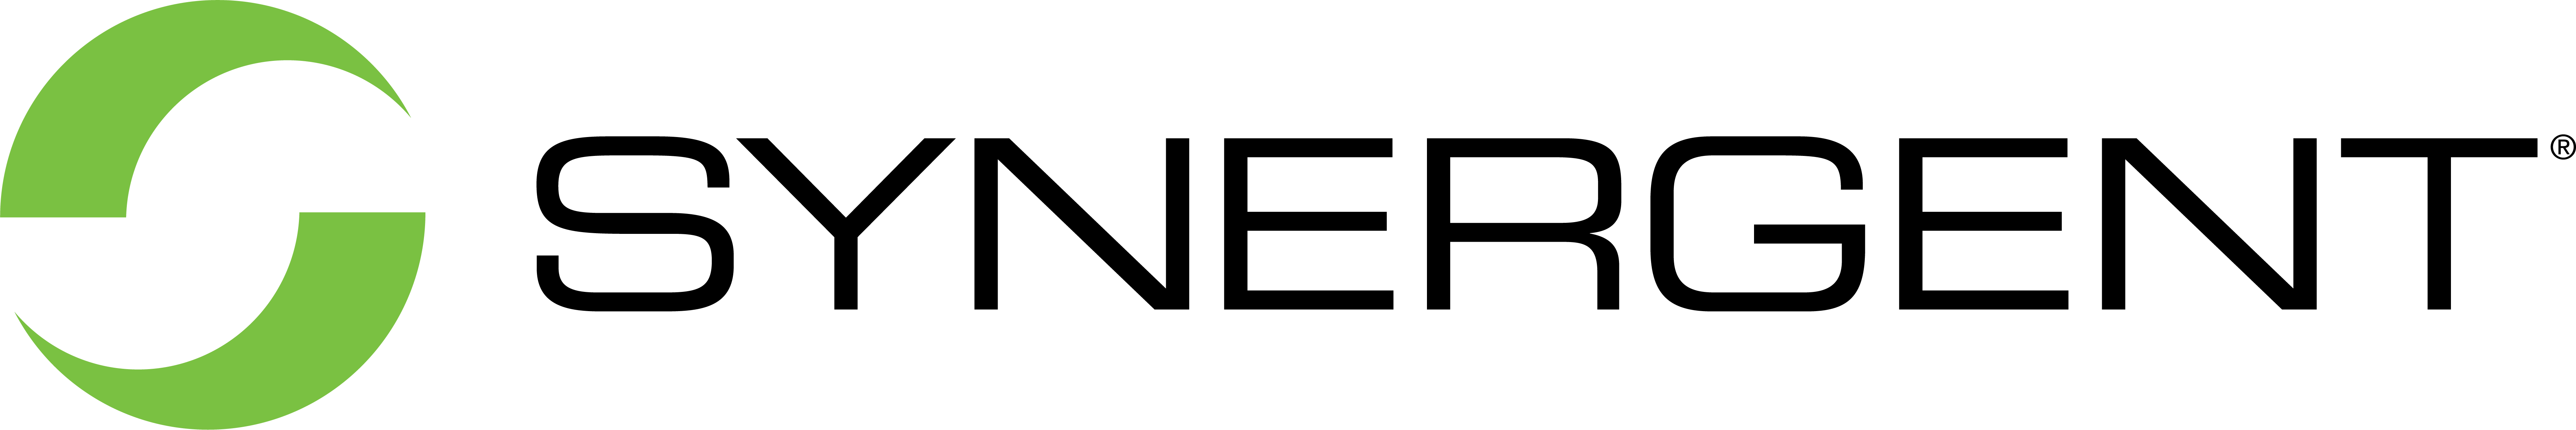 synergent logo